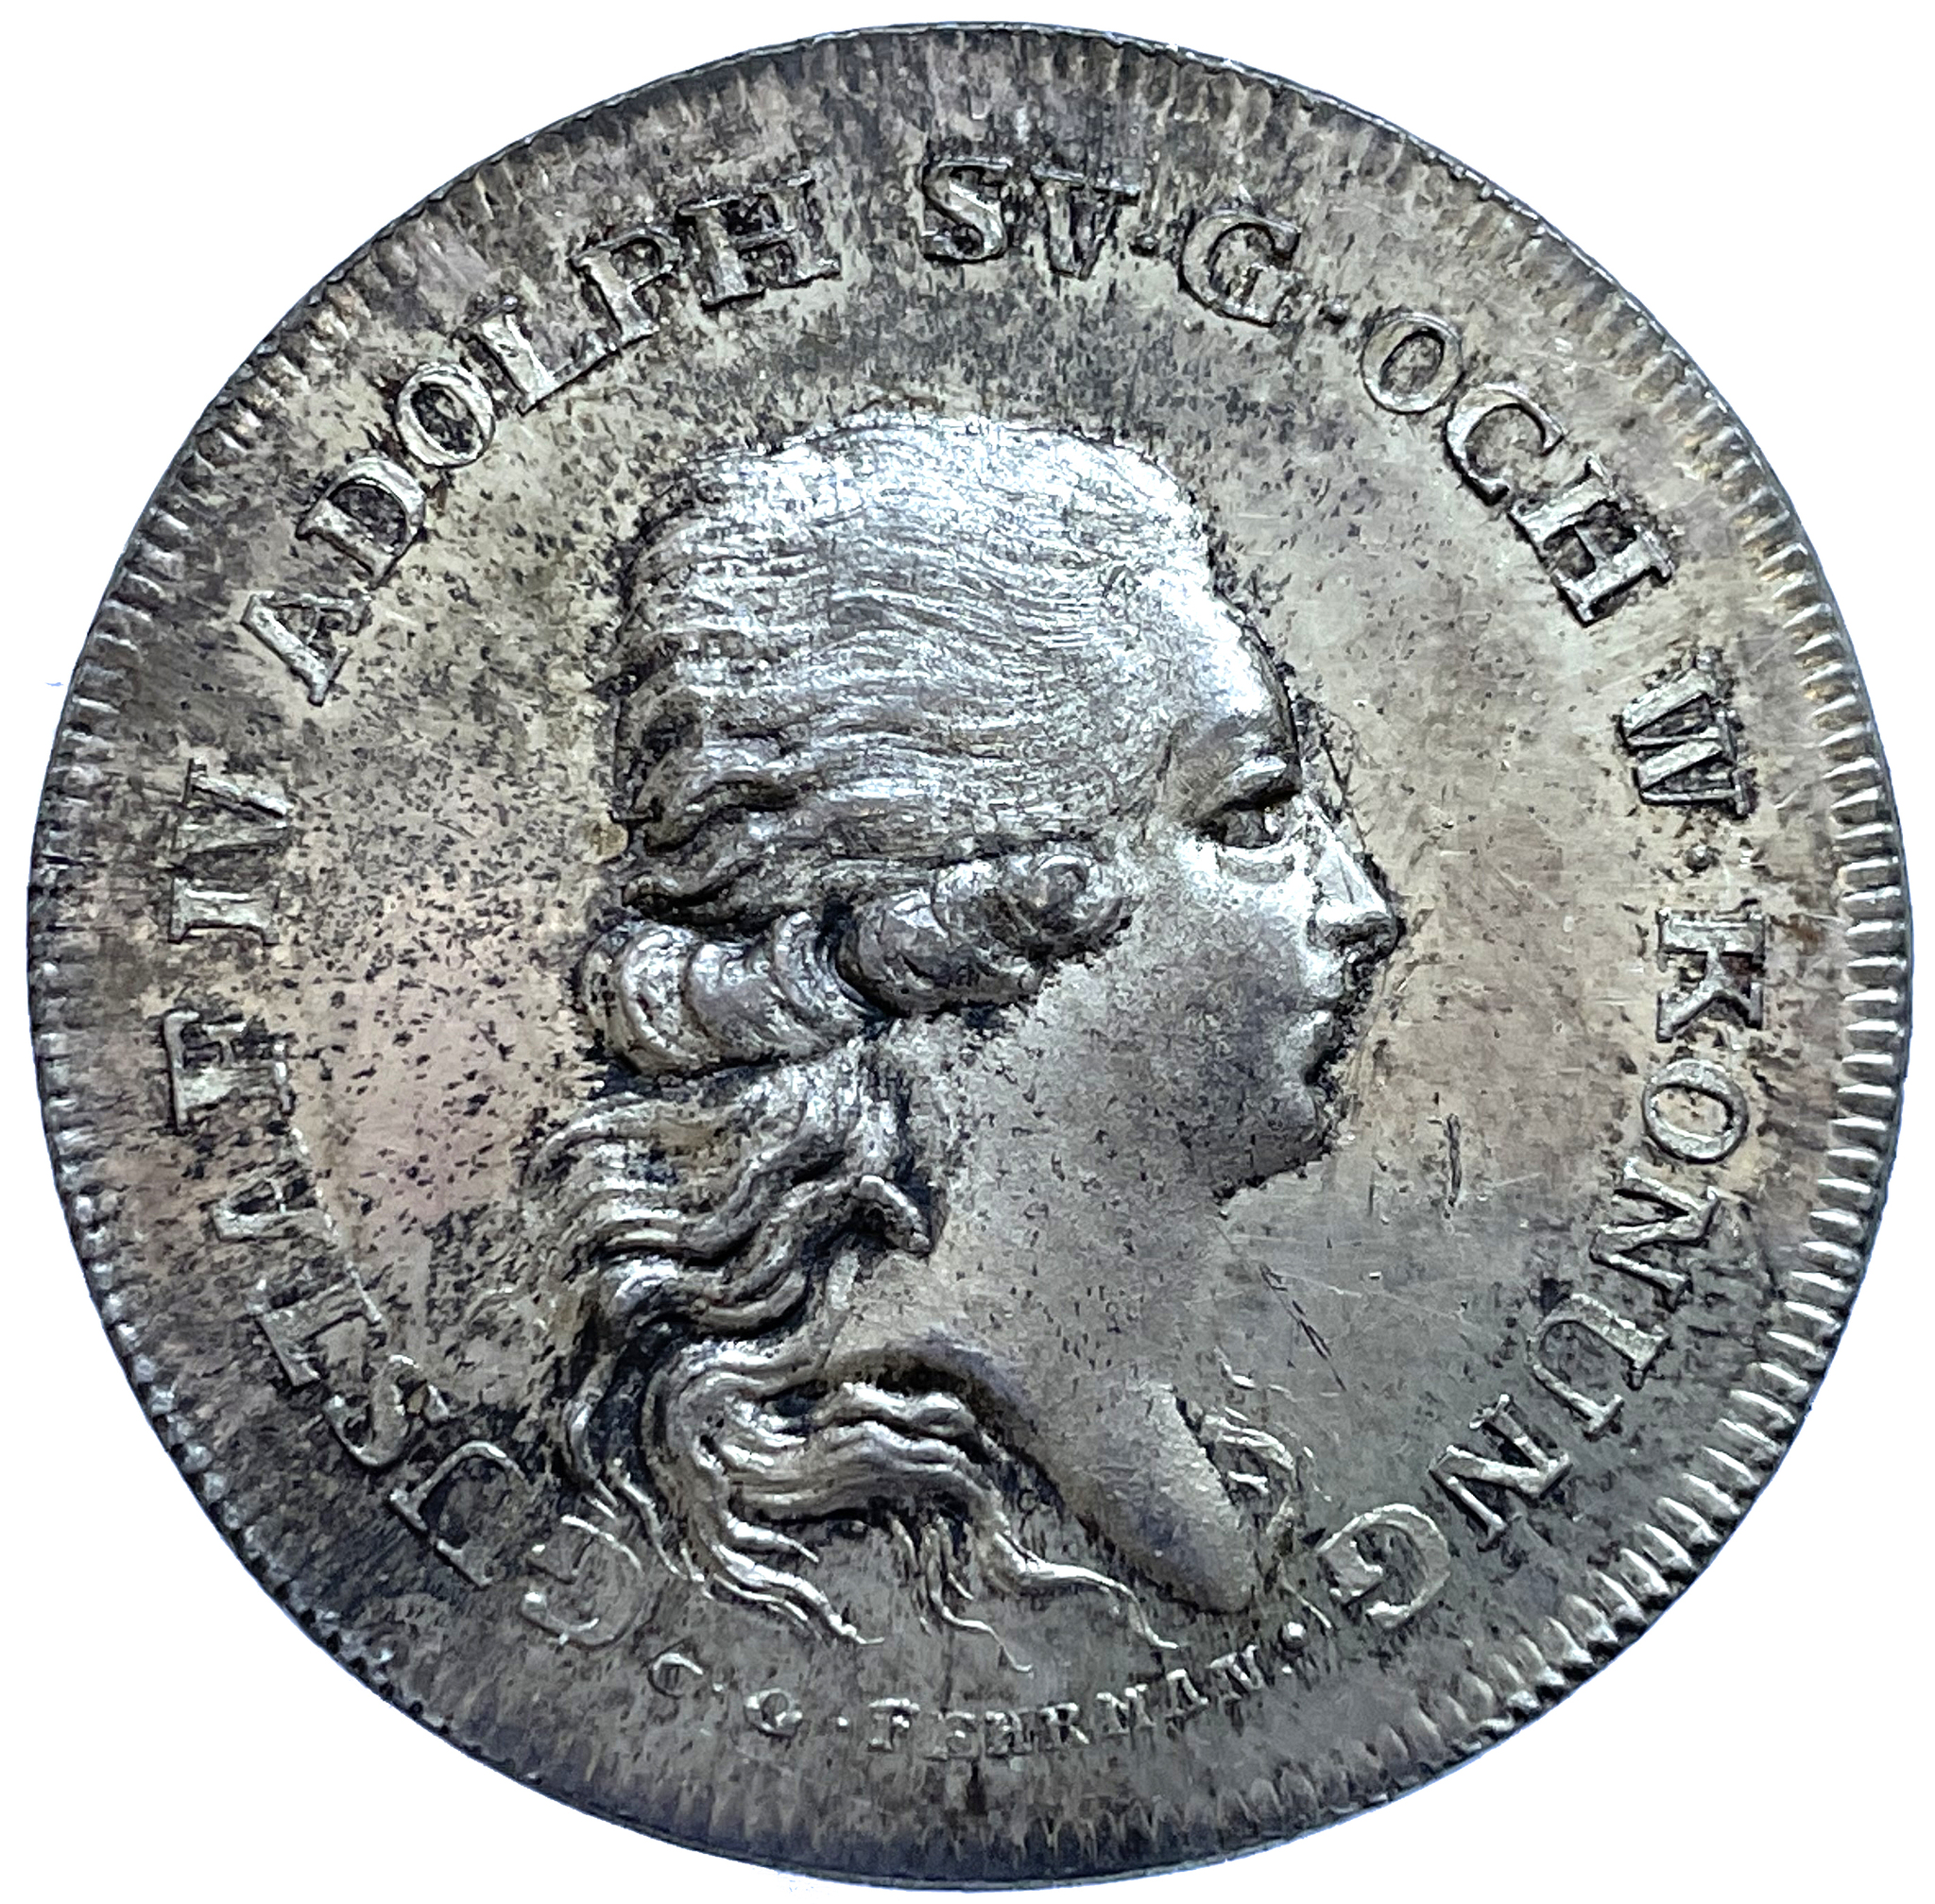 Gustav IV Adolf, Medalj utdelad vid tornerspelen år 1800 av Fehrman